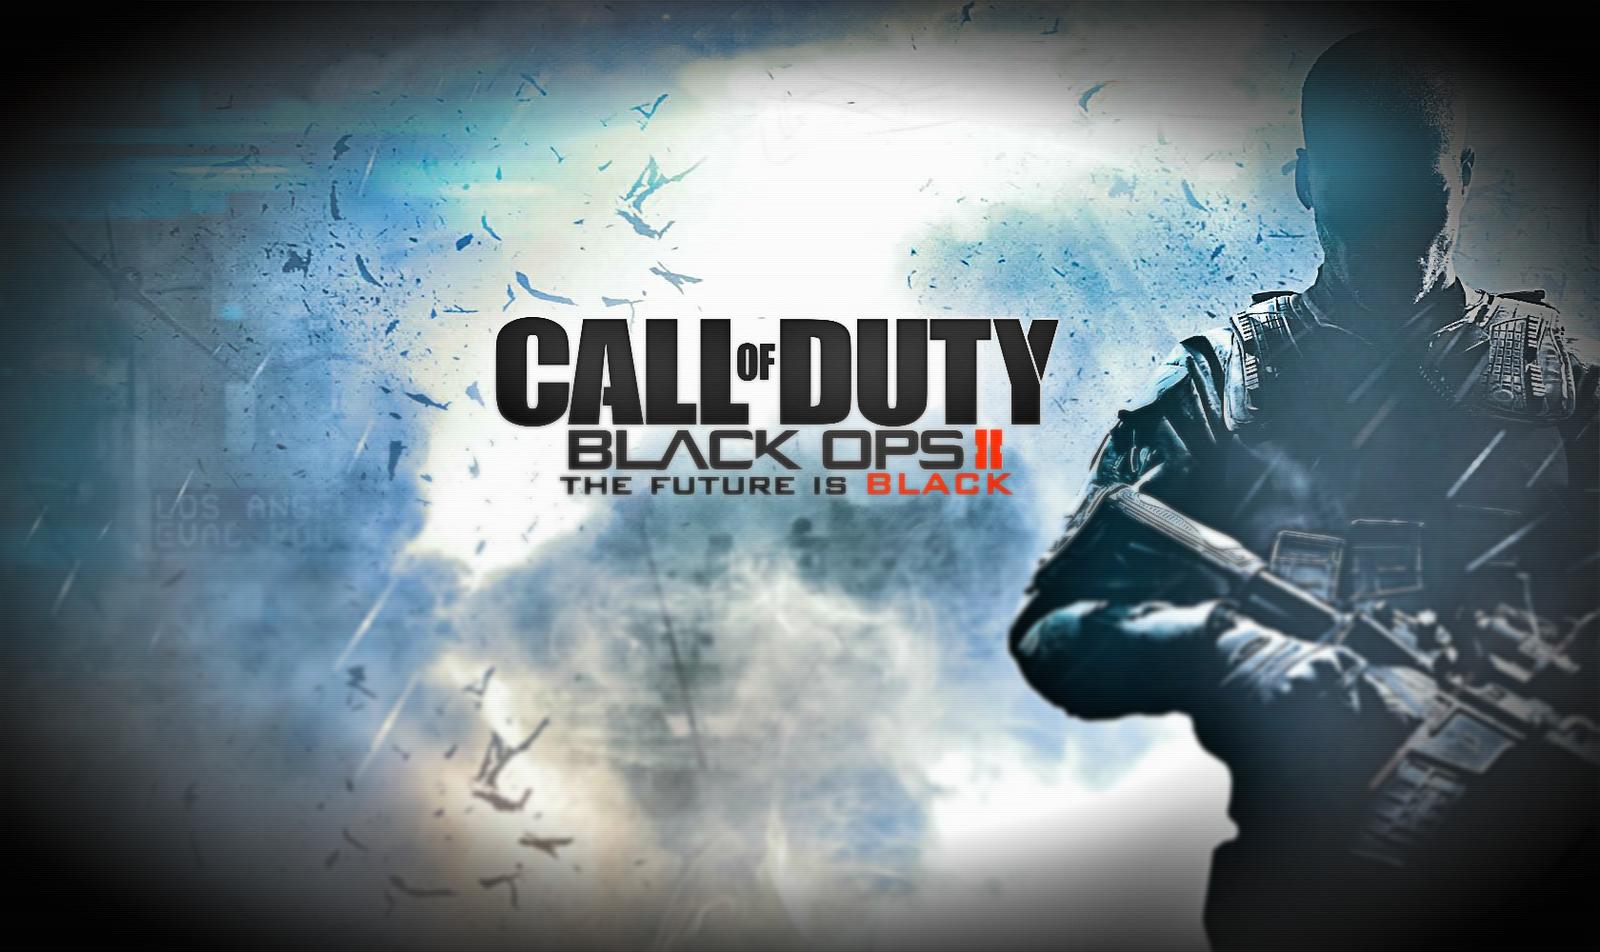 HD WALLPAPERS: Call of Duty Black ops 2 HD Wallpaper